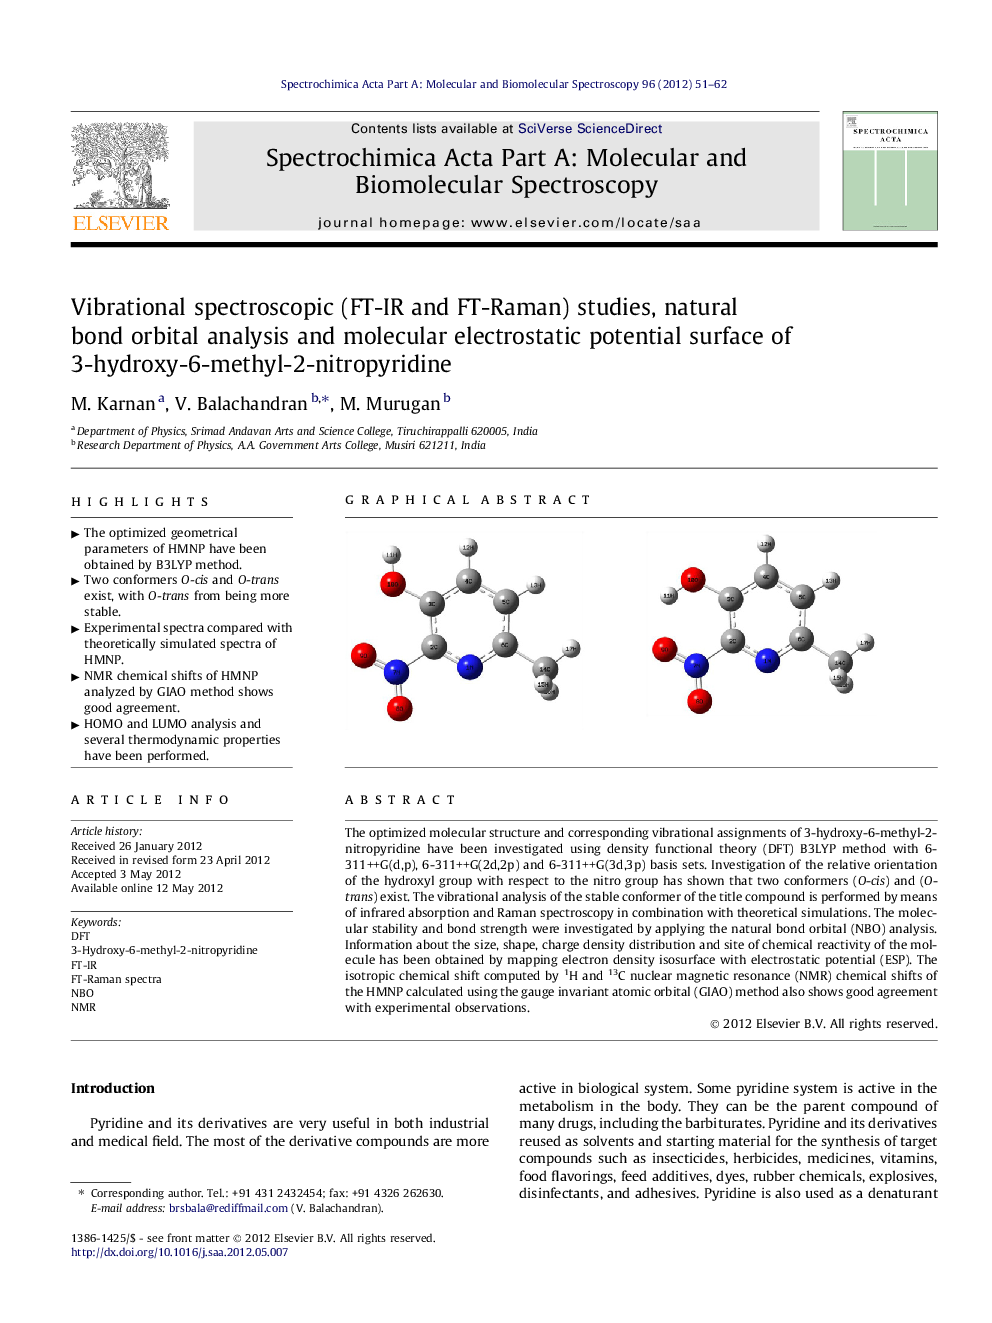 Vibrational spectroscopic (FT-IR and FT-Raman) studies, natural bond orbital analysis and molecular electrostatic potential surface of 3-hydroxy-6-methyl-2-nitropyridine